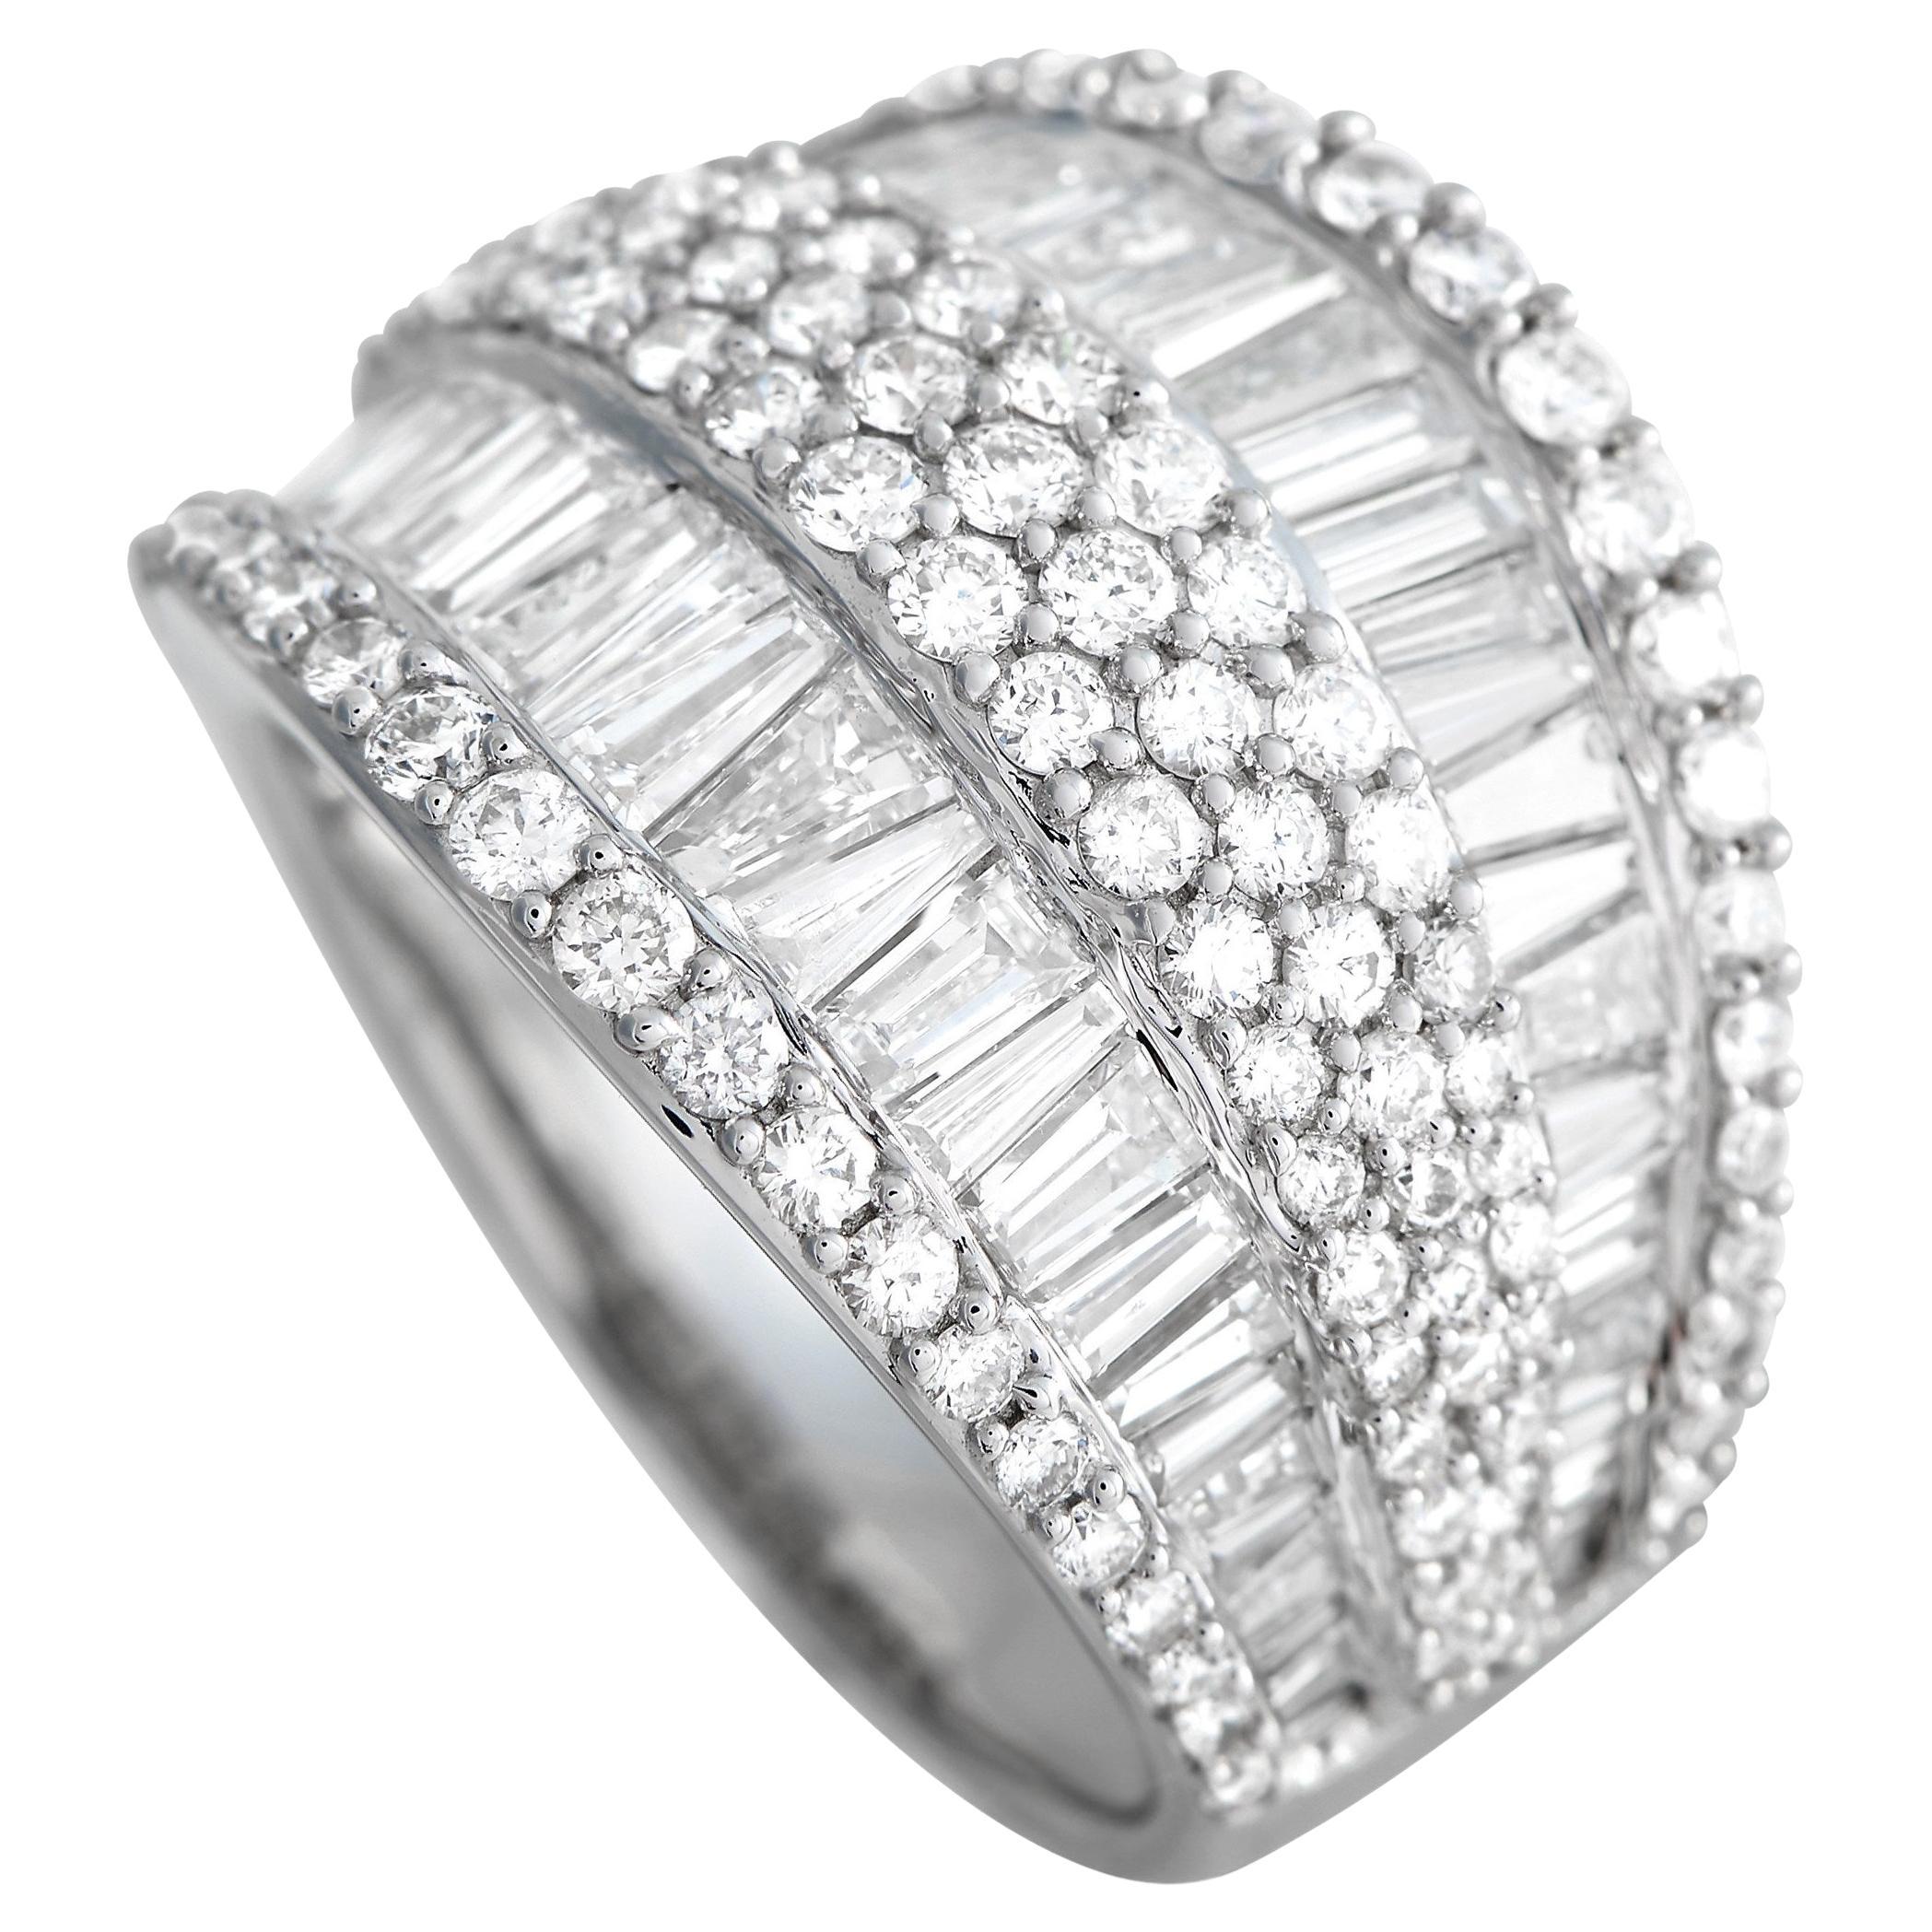 LB Exclusive 18K White Gold 3.55 Ct Diamond Ring